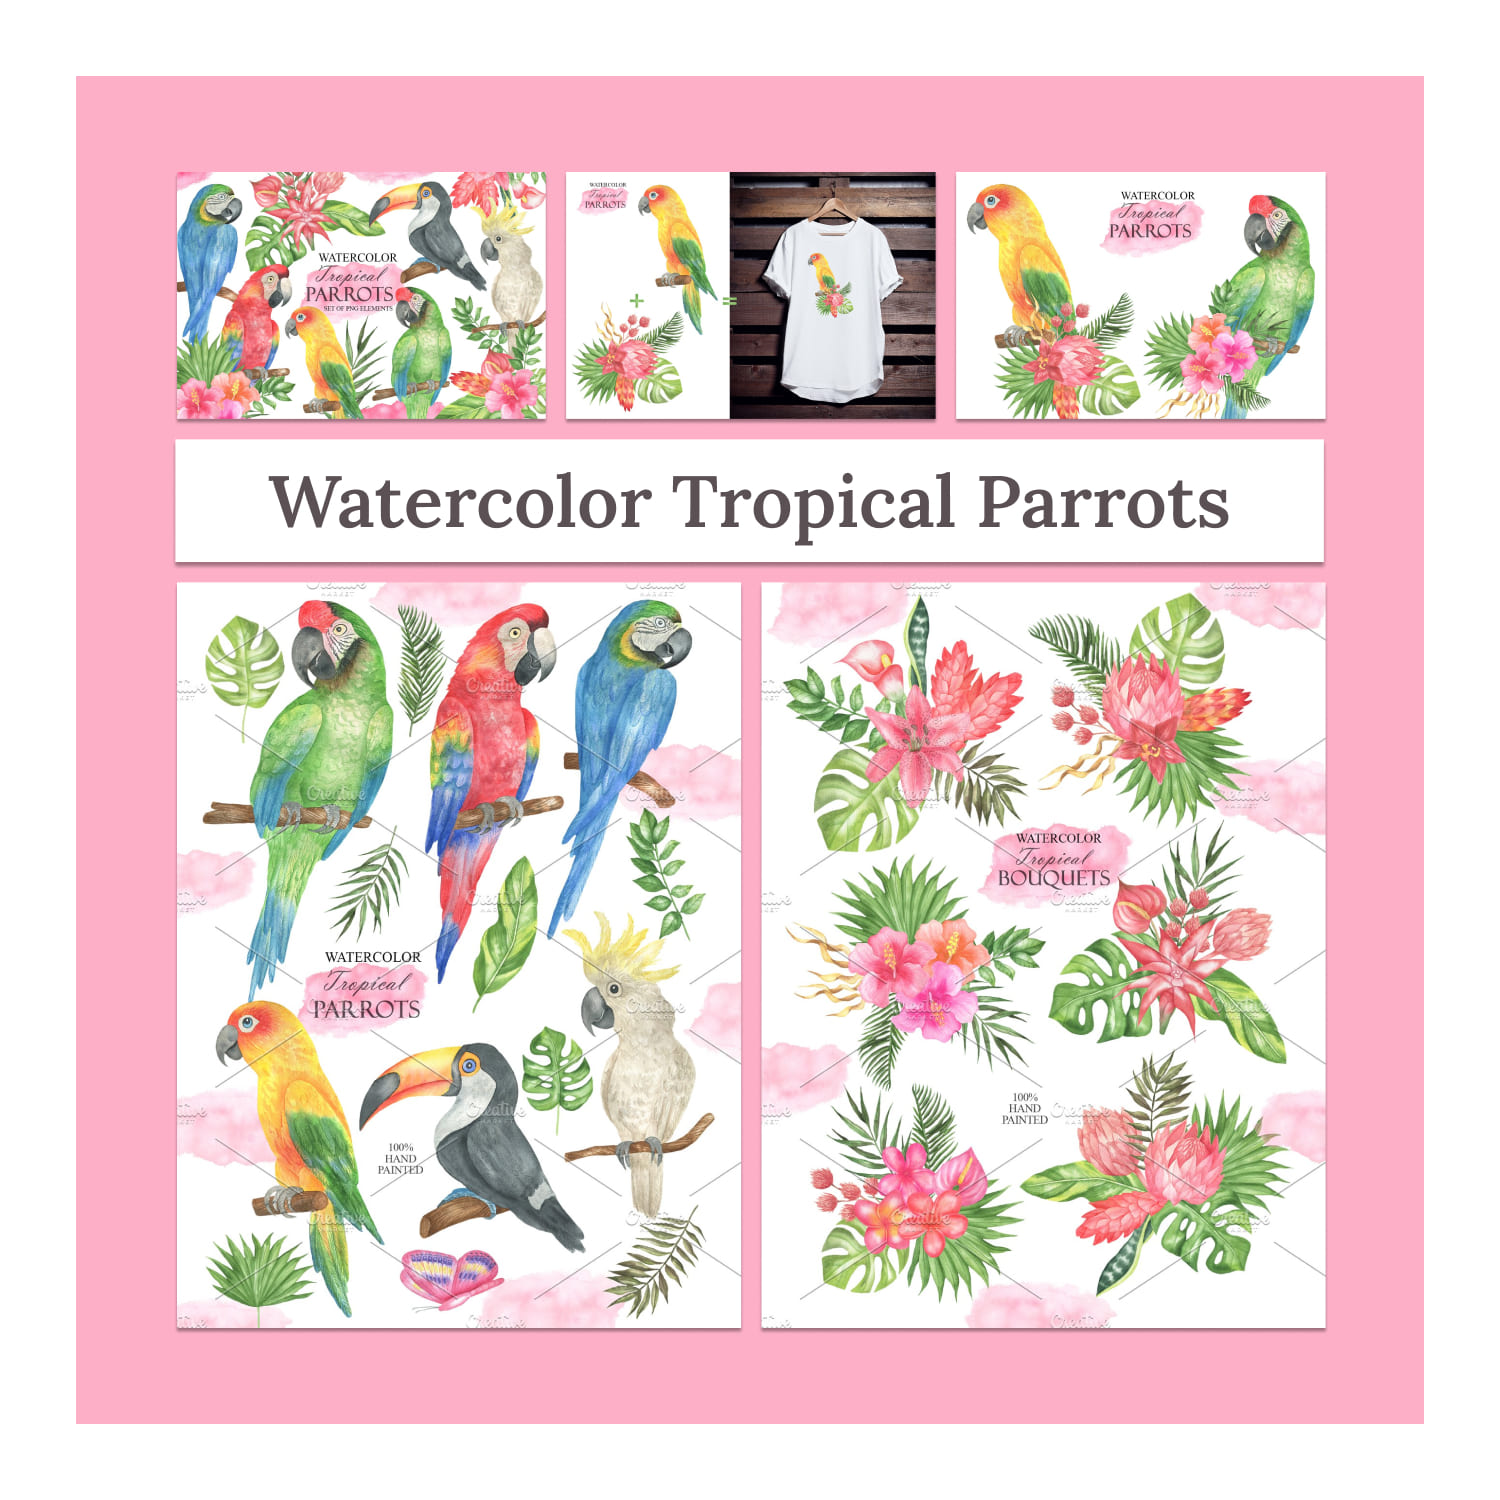 Watercolor tropical parrots - main image preview.